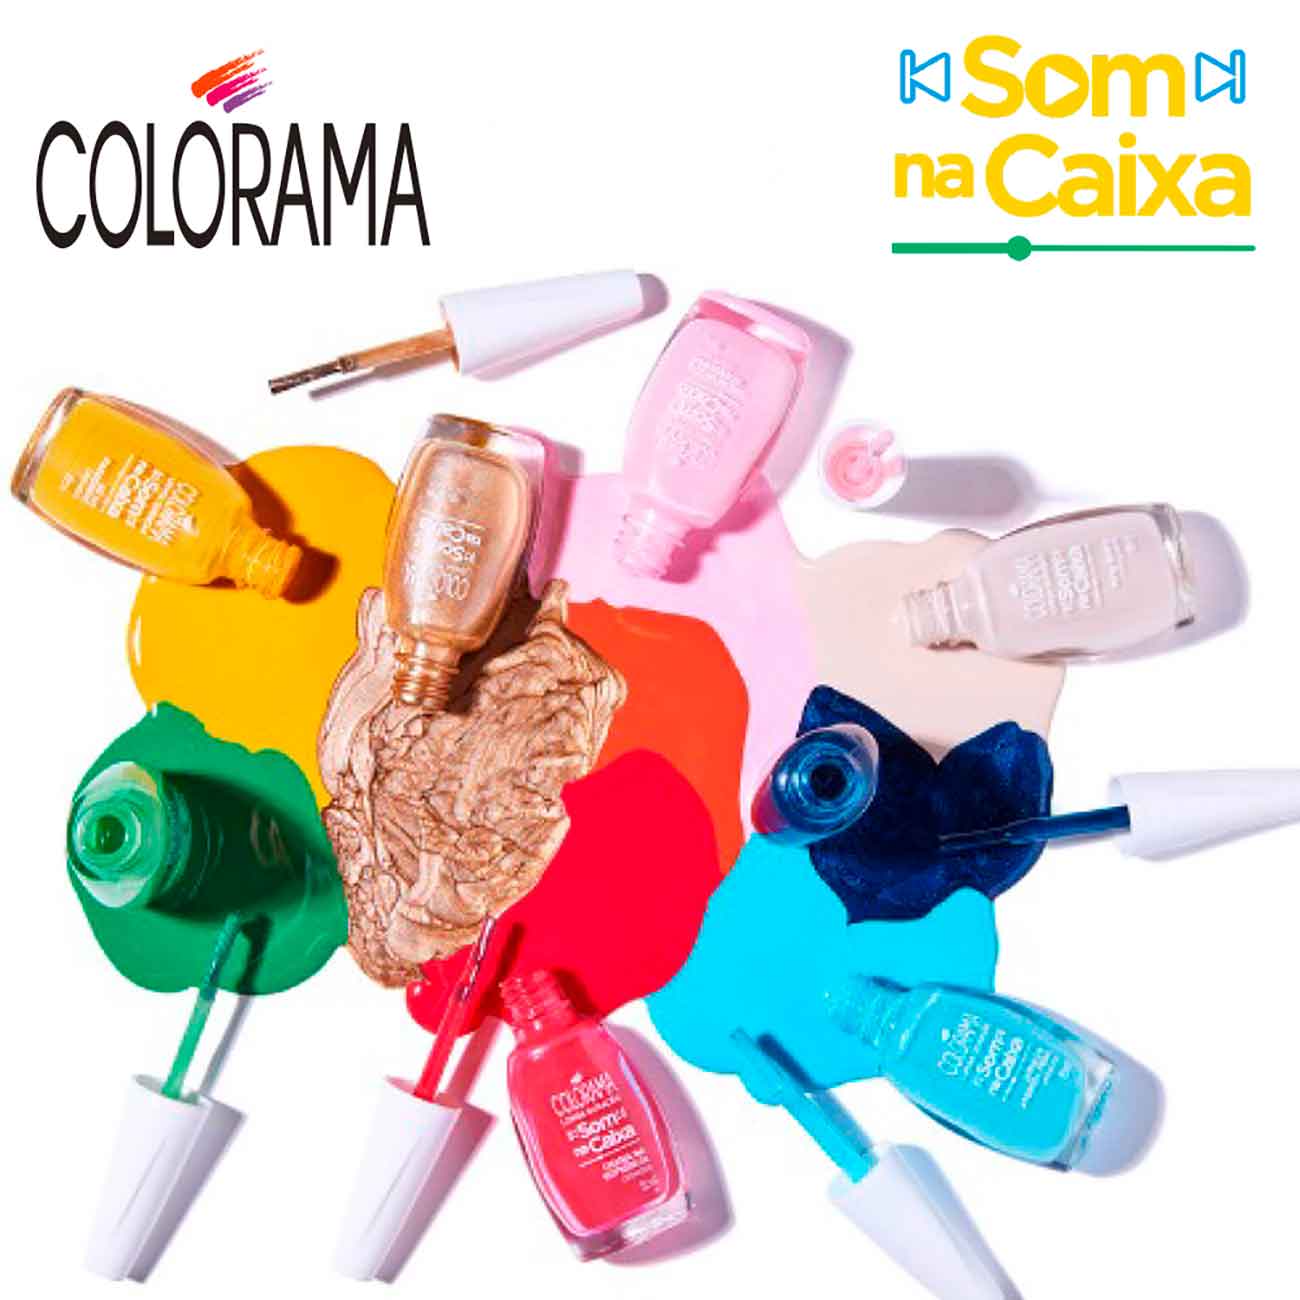 Esmalte Colorama Som na Caixa - Sobe no Trio  8mL